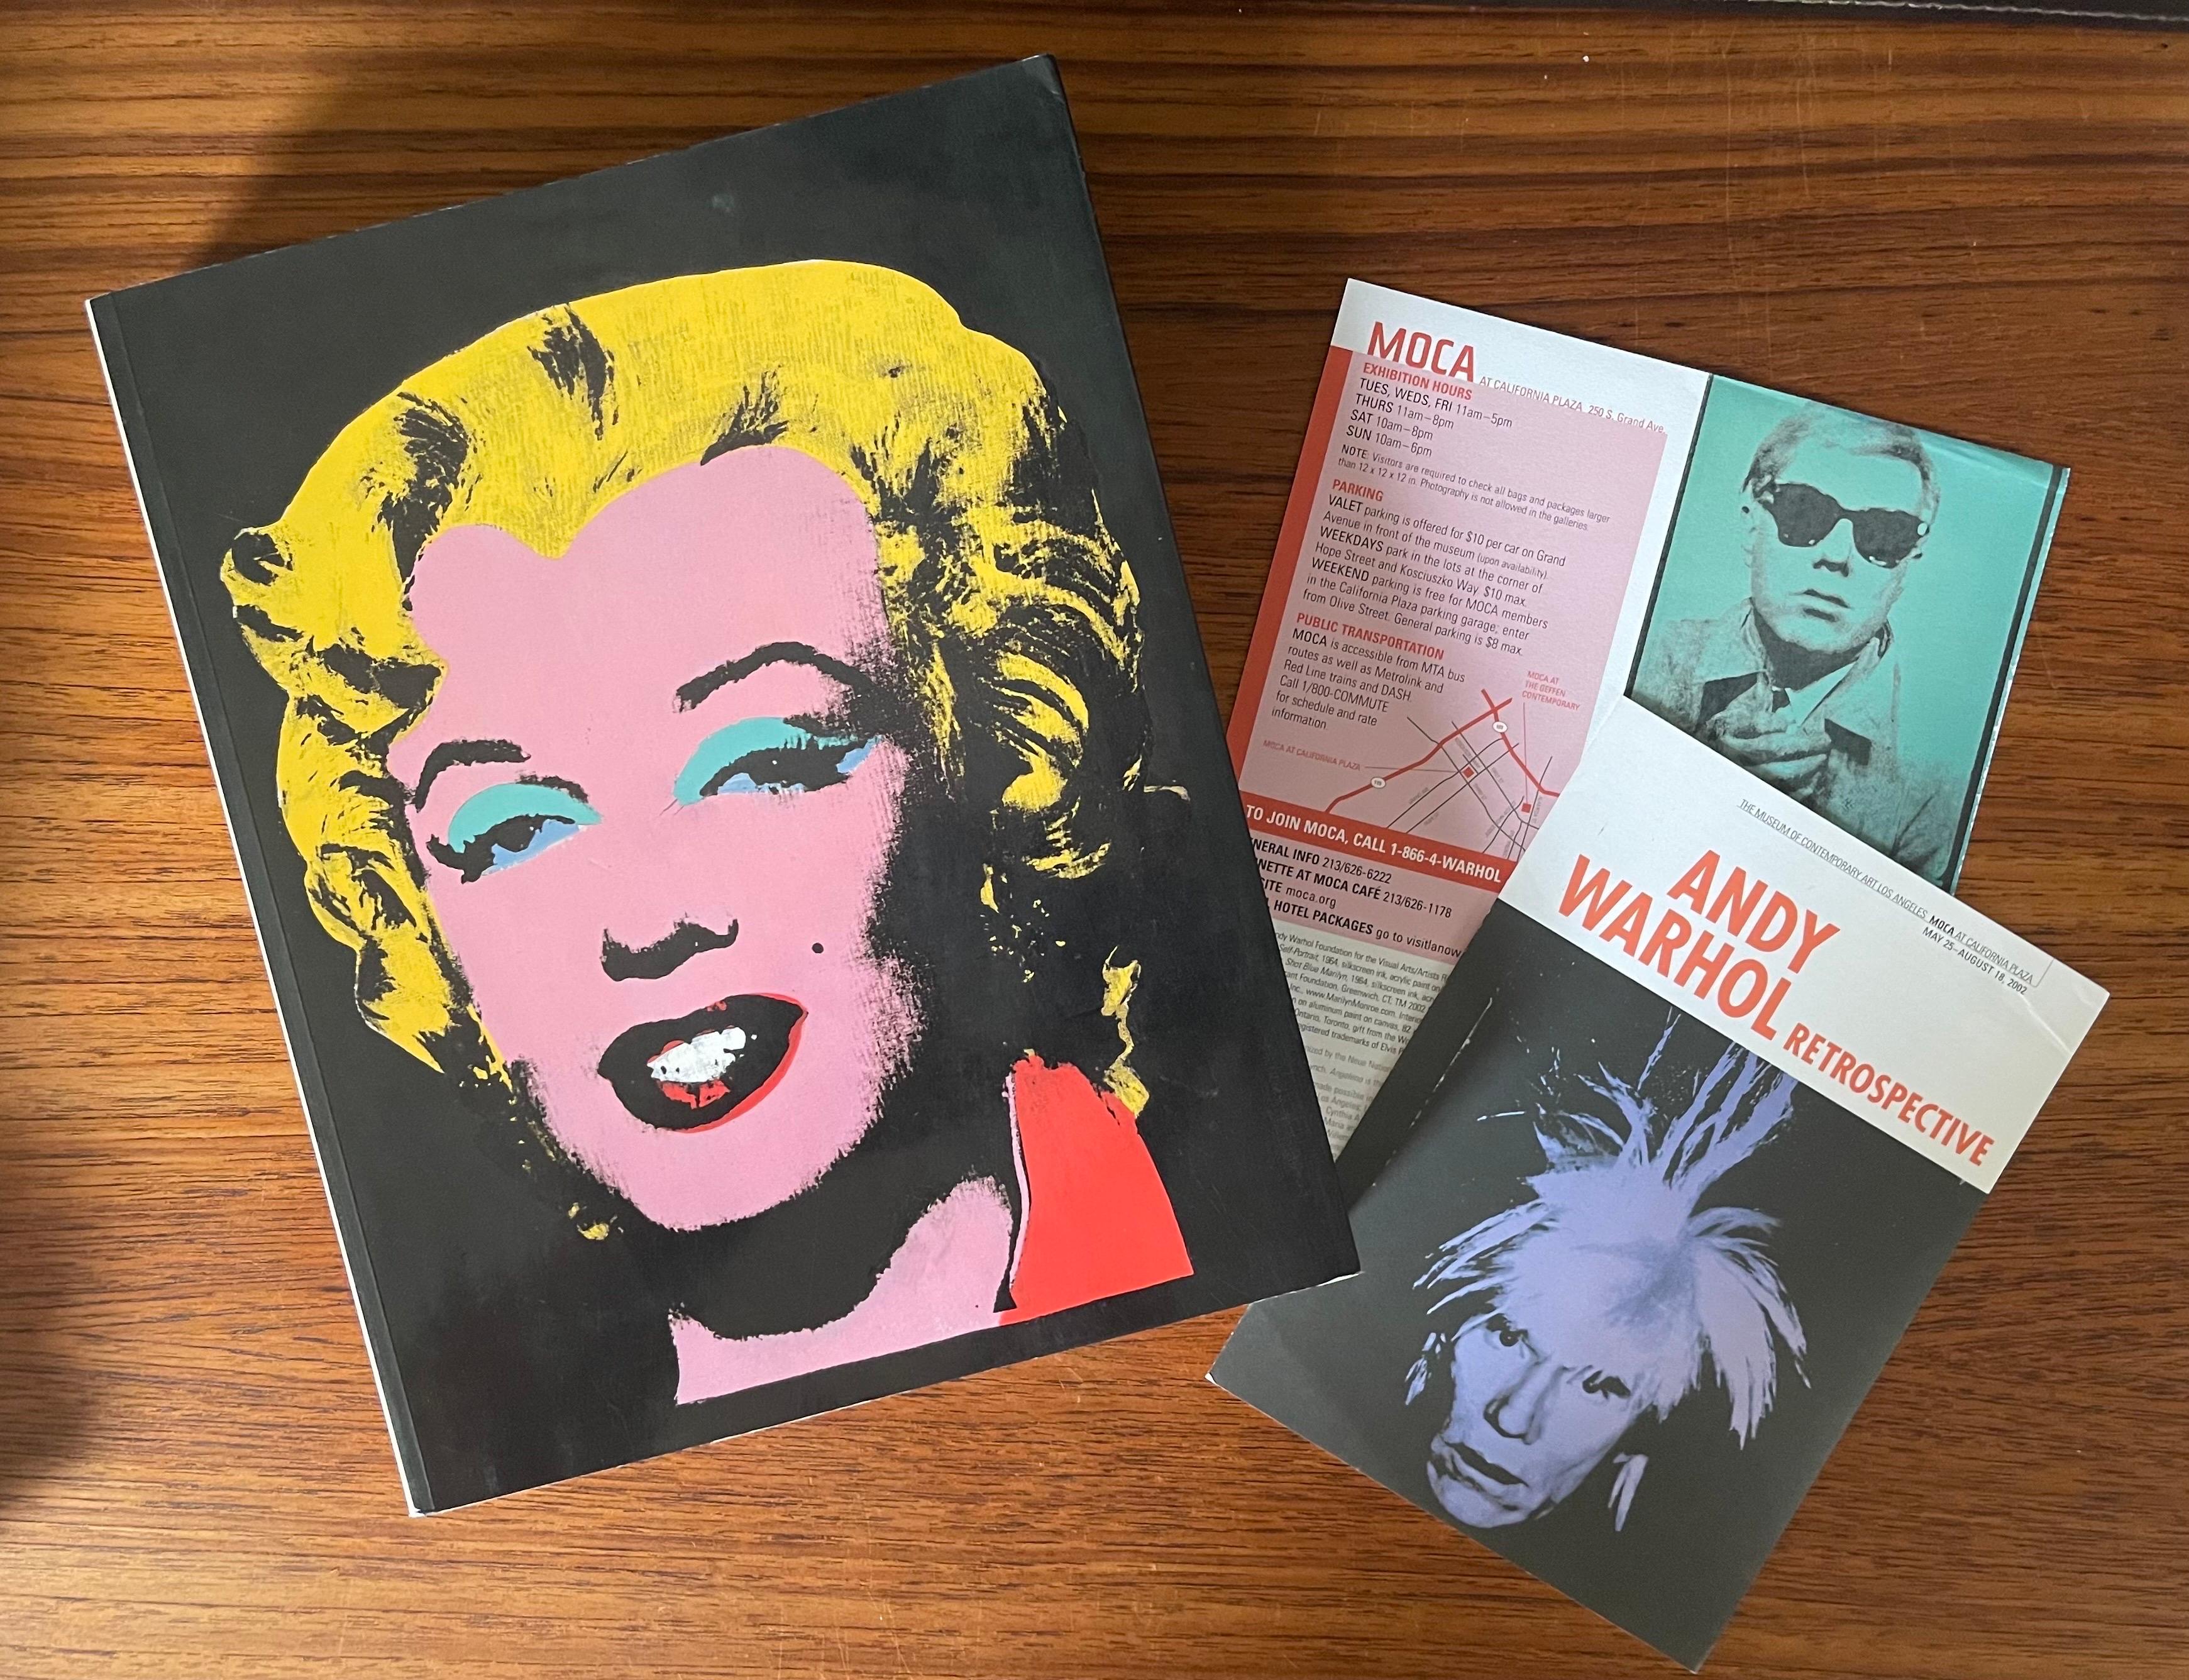 Livres d'art rétrospectifs et programmes d'expositions Moca LA 2002 de Warhol en vente 10